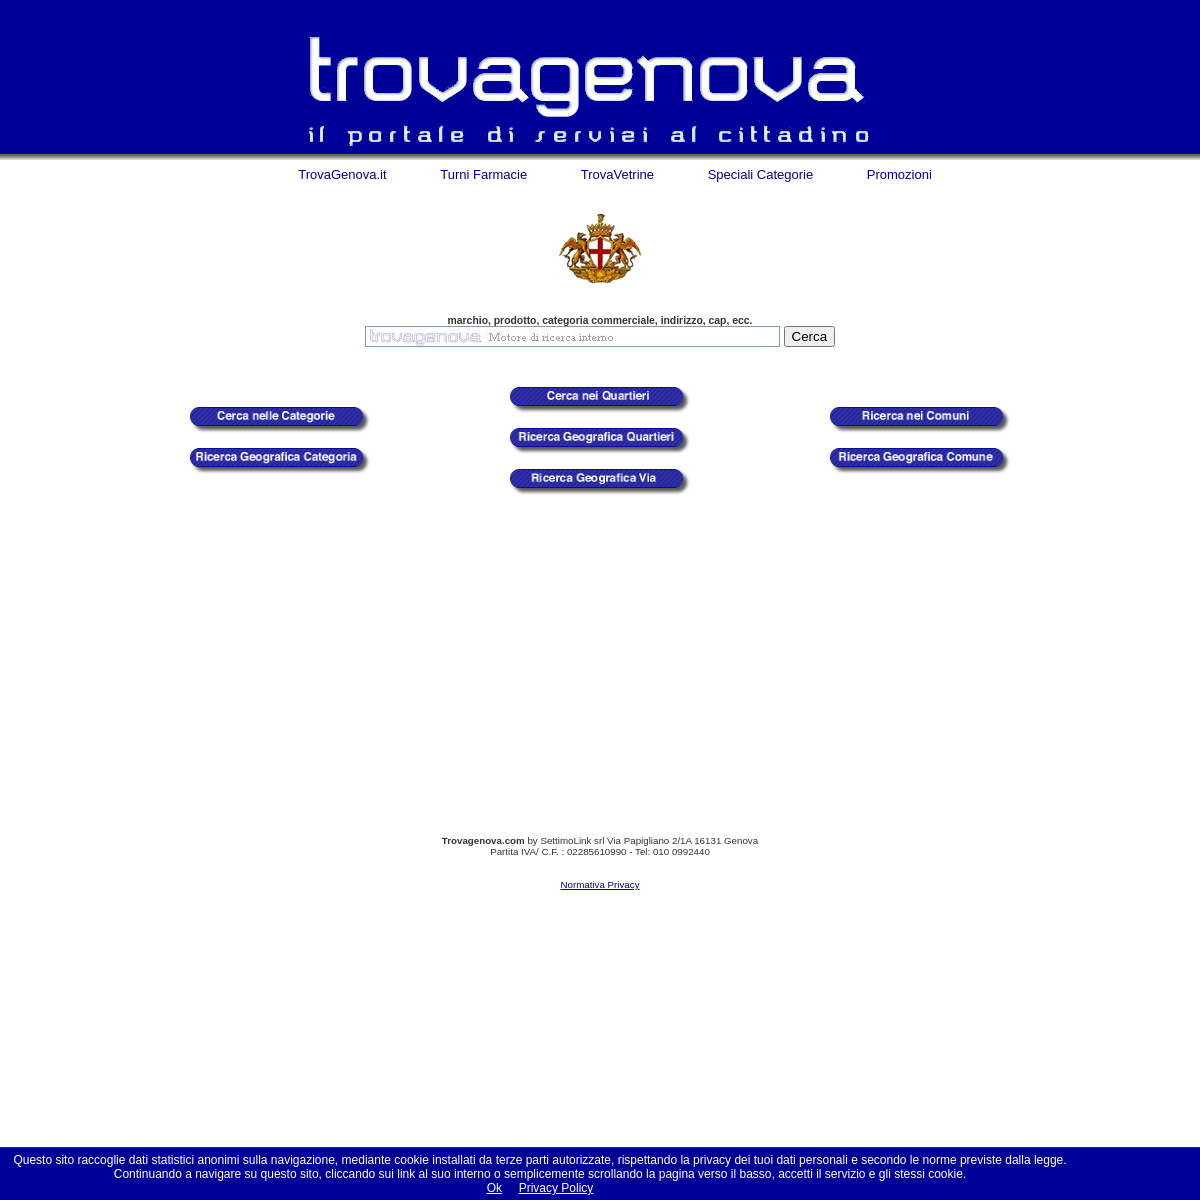 A complete backup of trovagenova.com